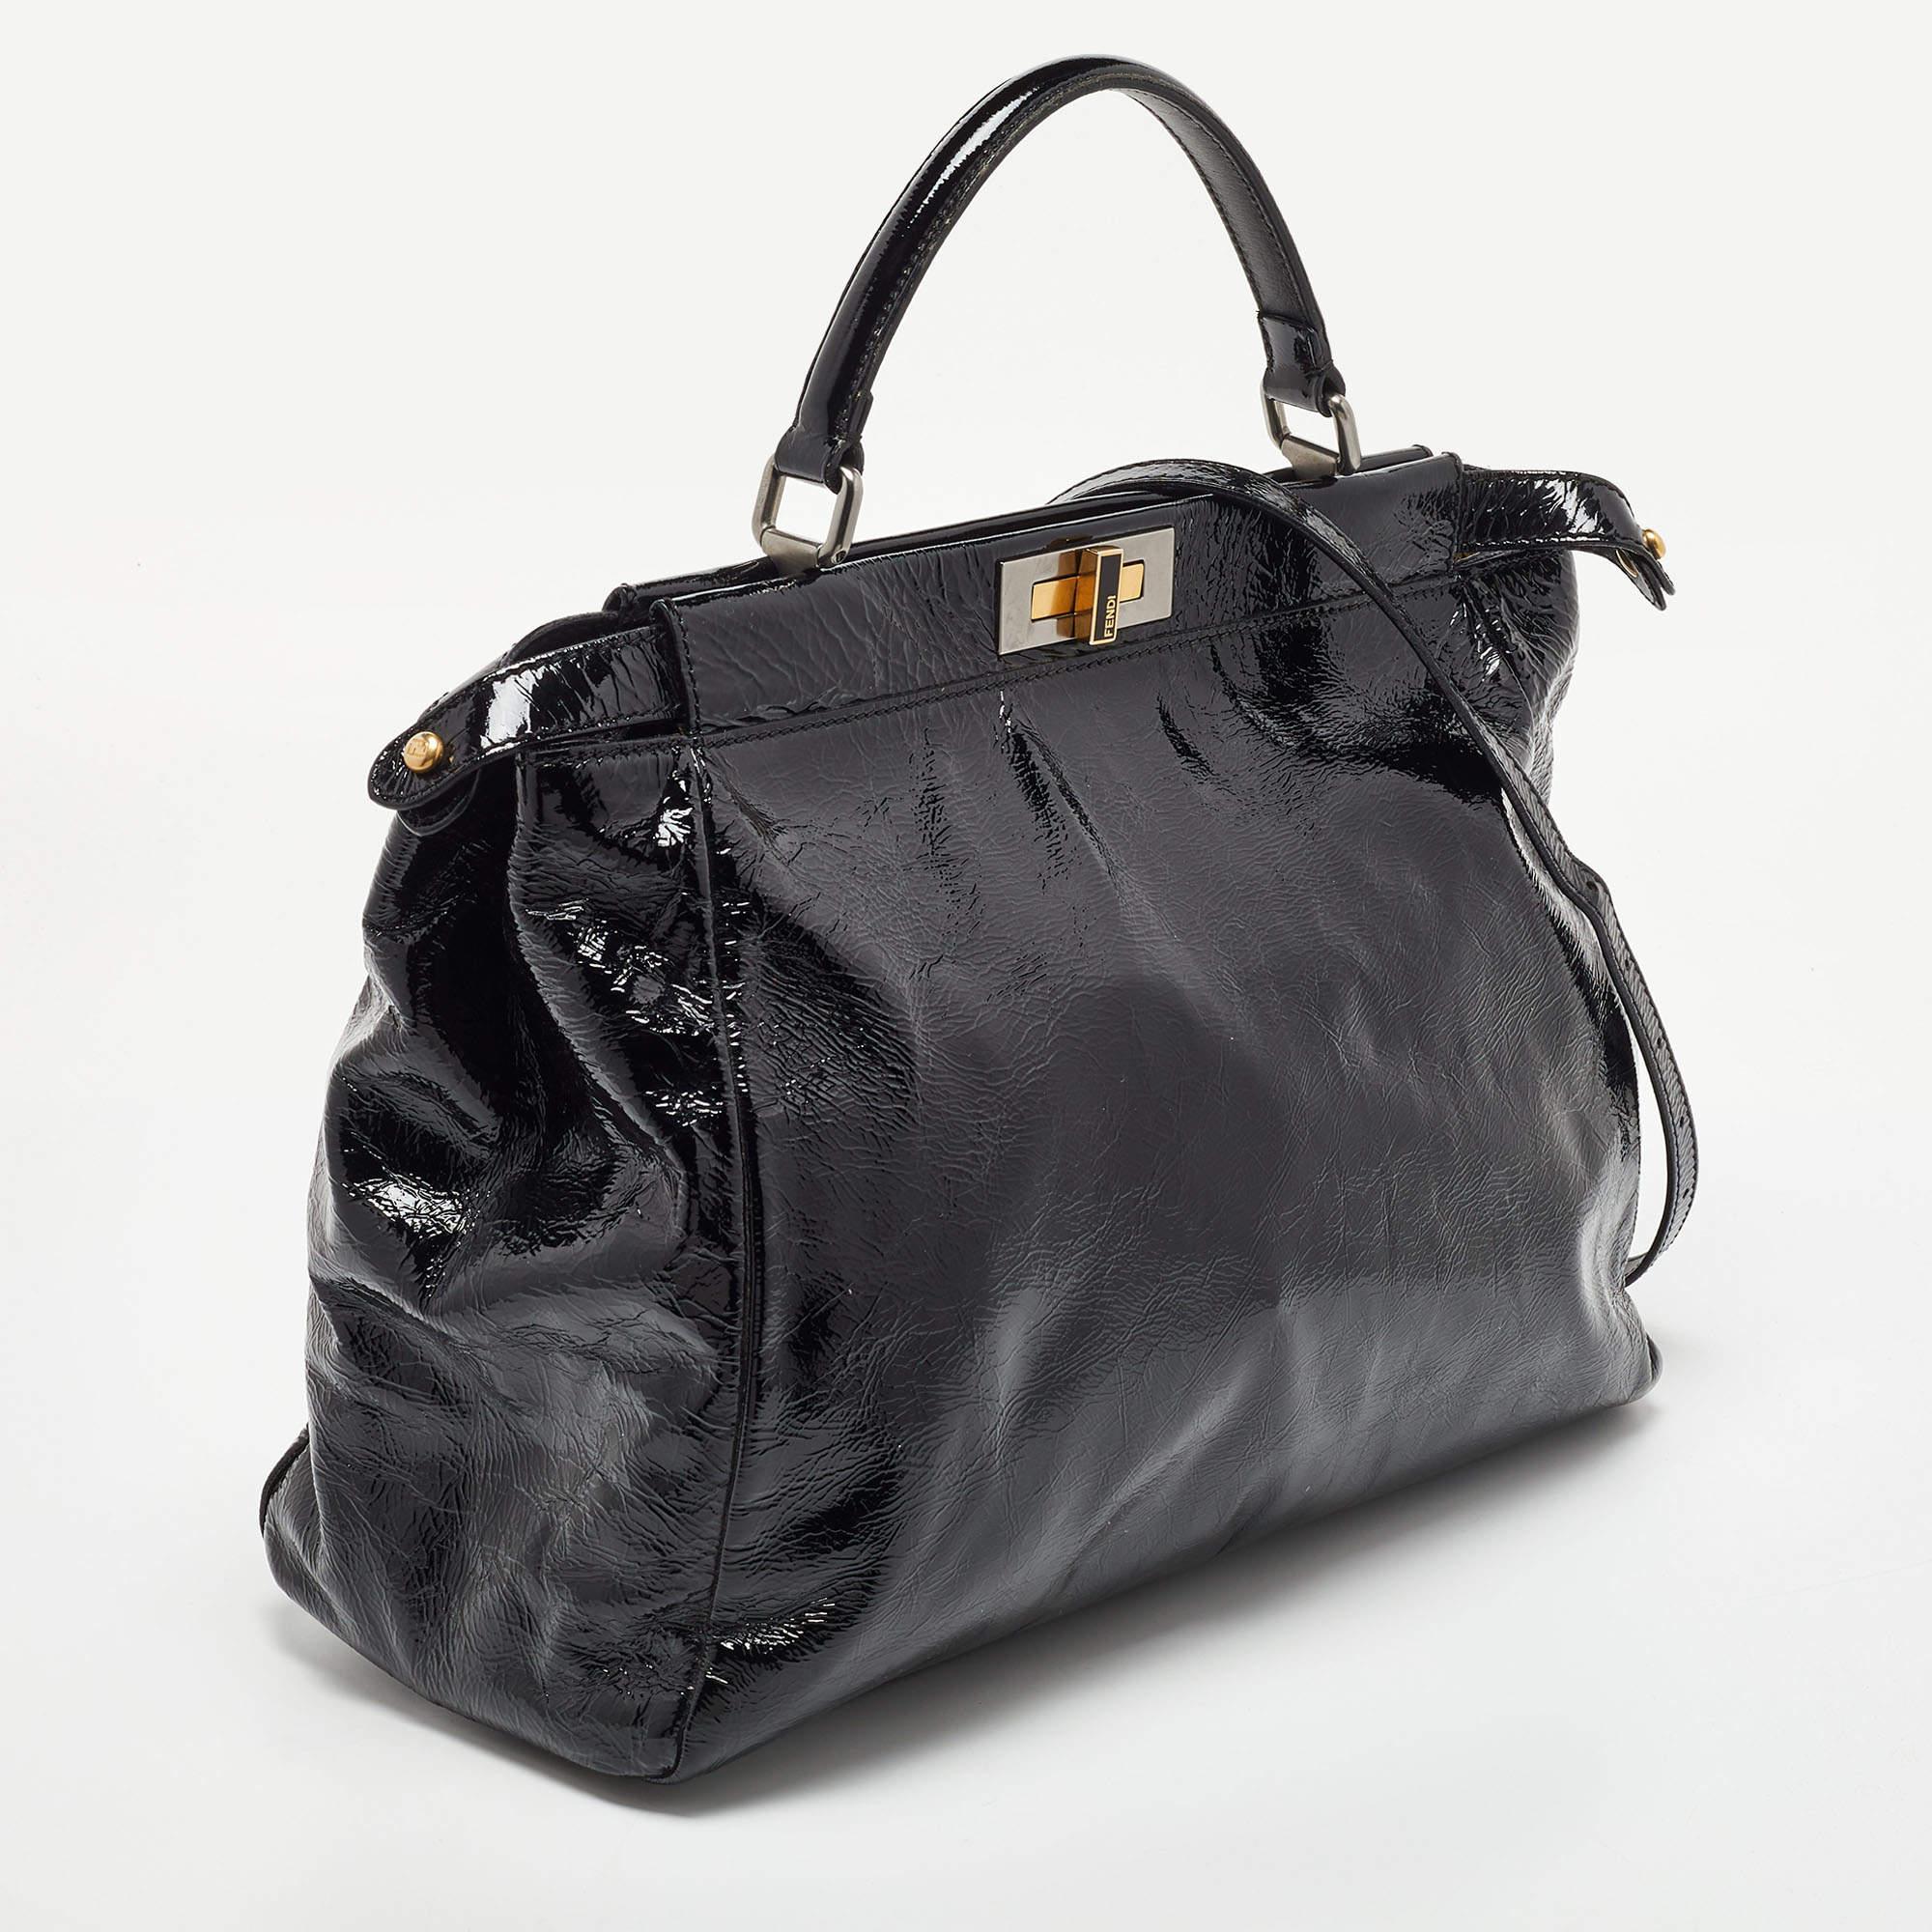 Women's Fendi Black Patent Leather Large Peekaboo Top Handle Bag